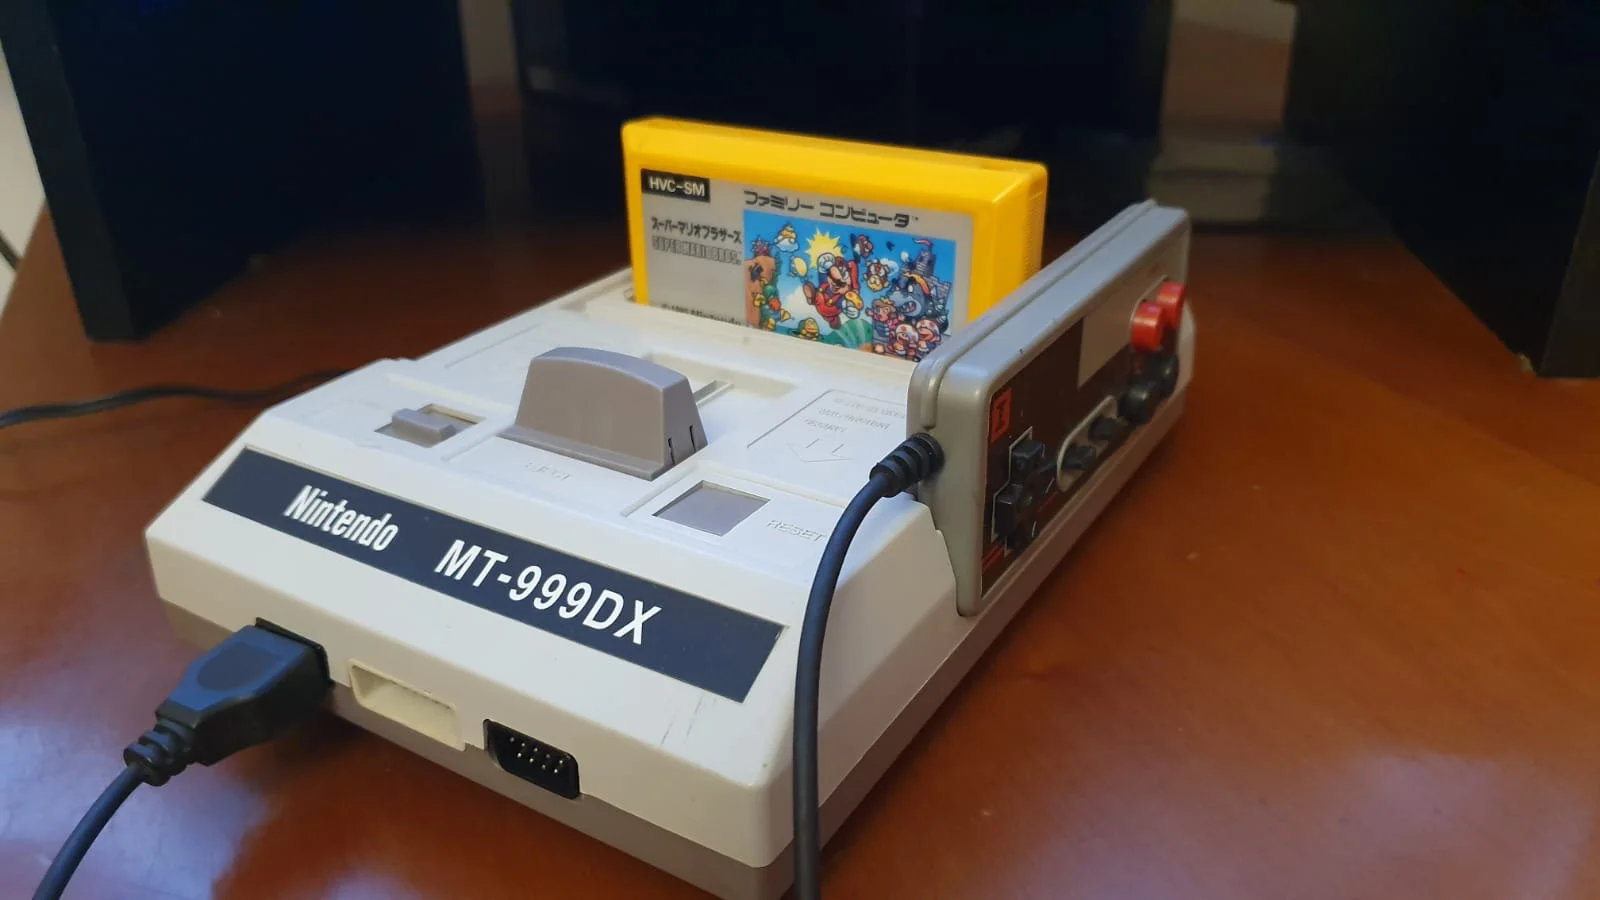  Nintendo MT 999 DX Famiclone